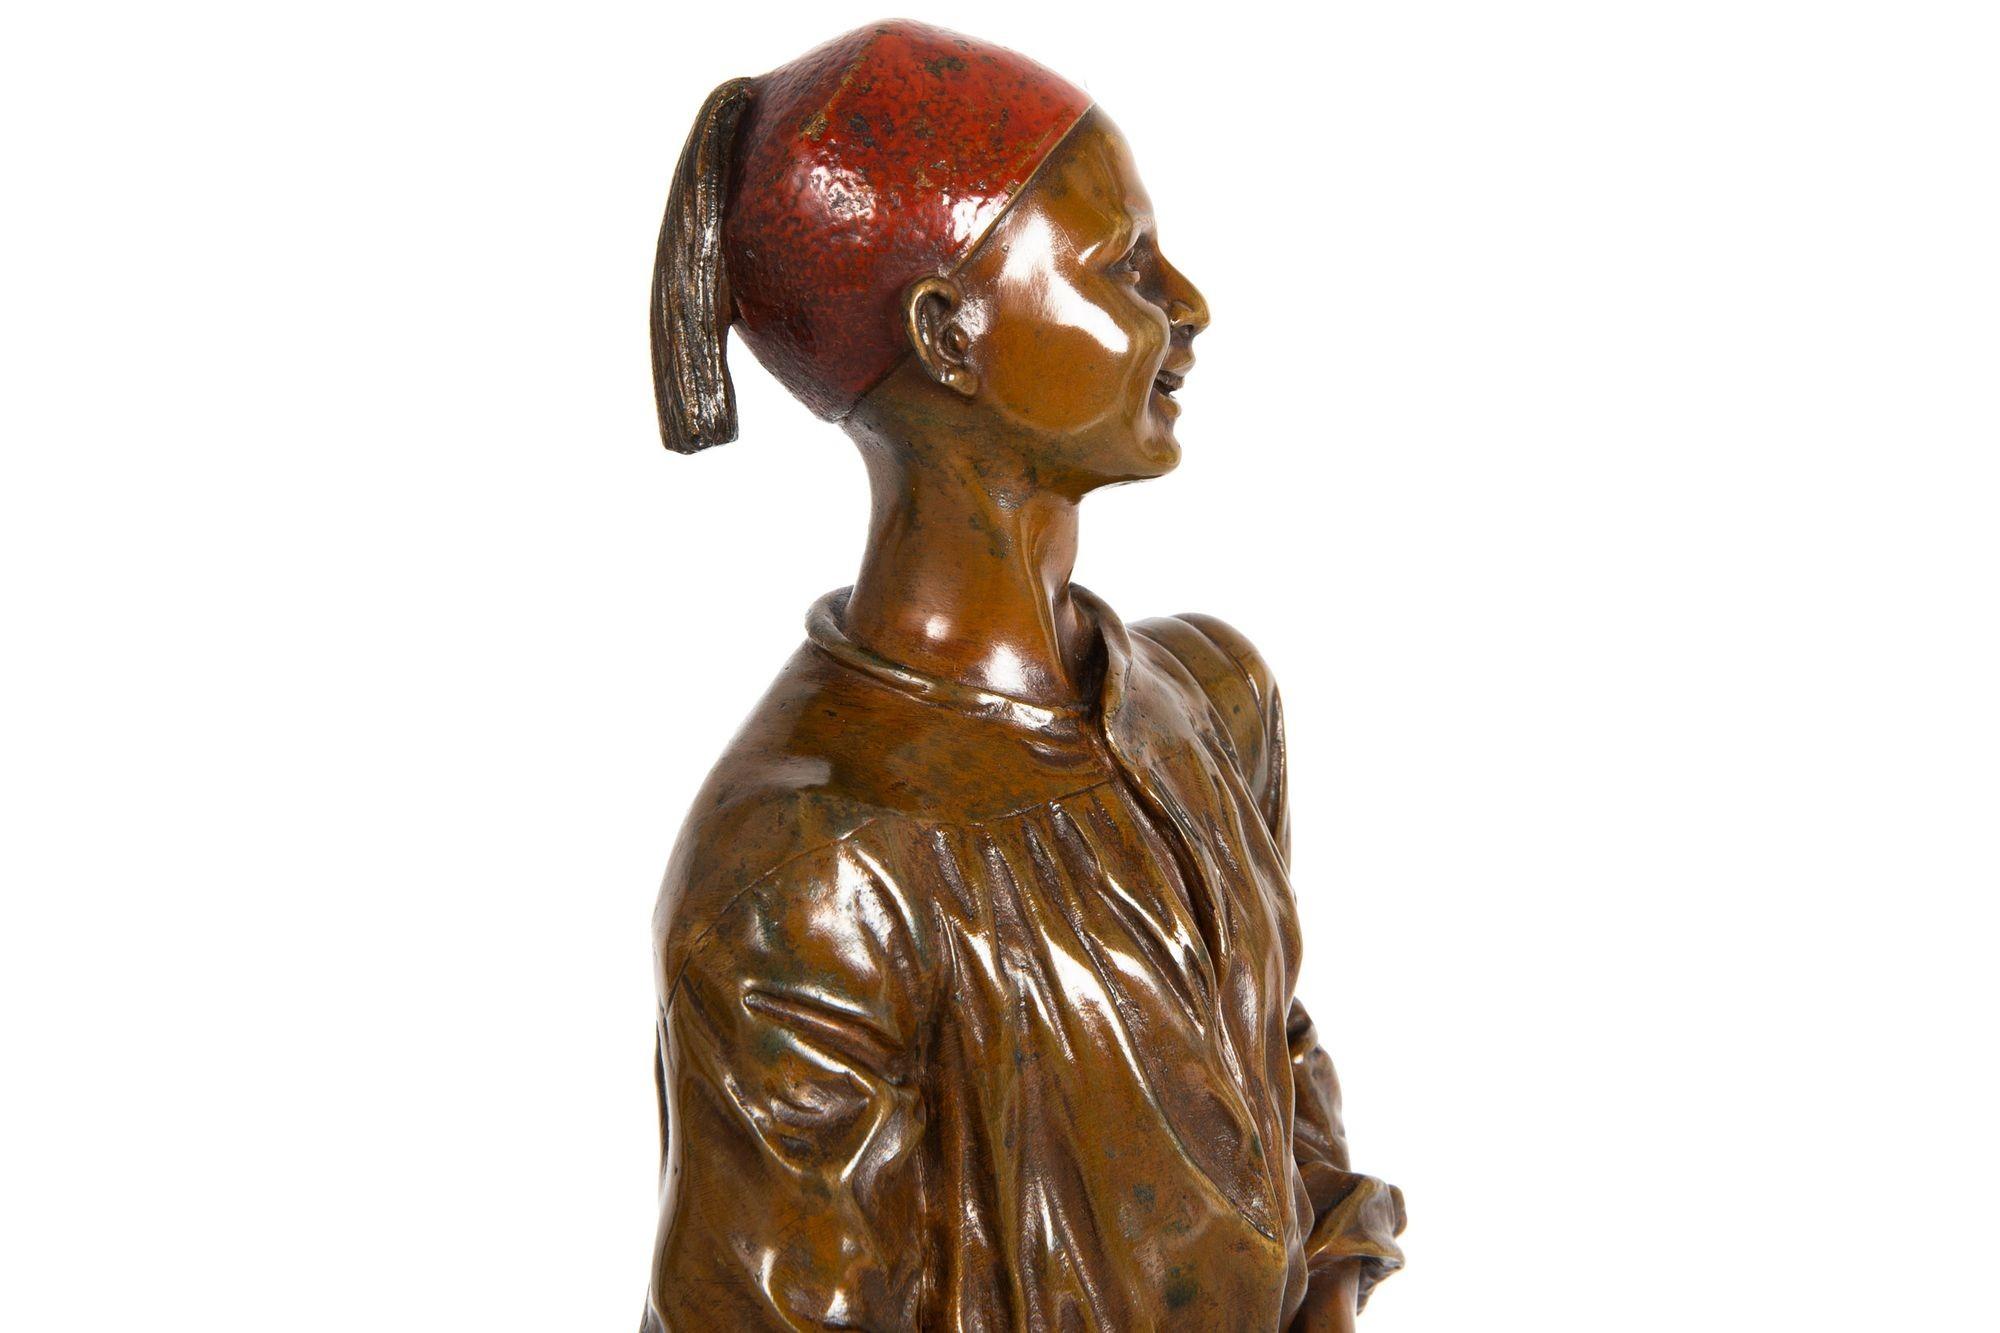 French Orientalist Bronze Sculpture “Arab Shoeshine” after Edouard Drouot For Sale 9